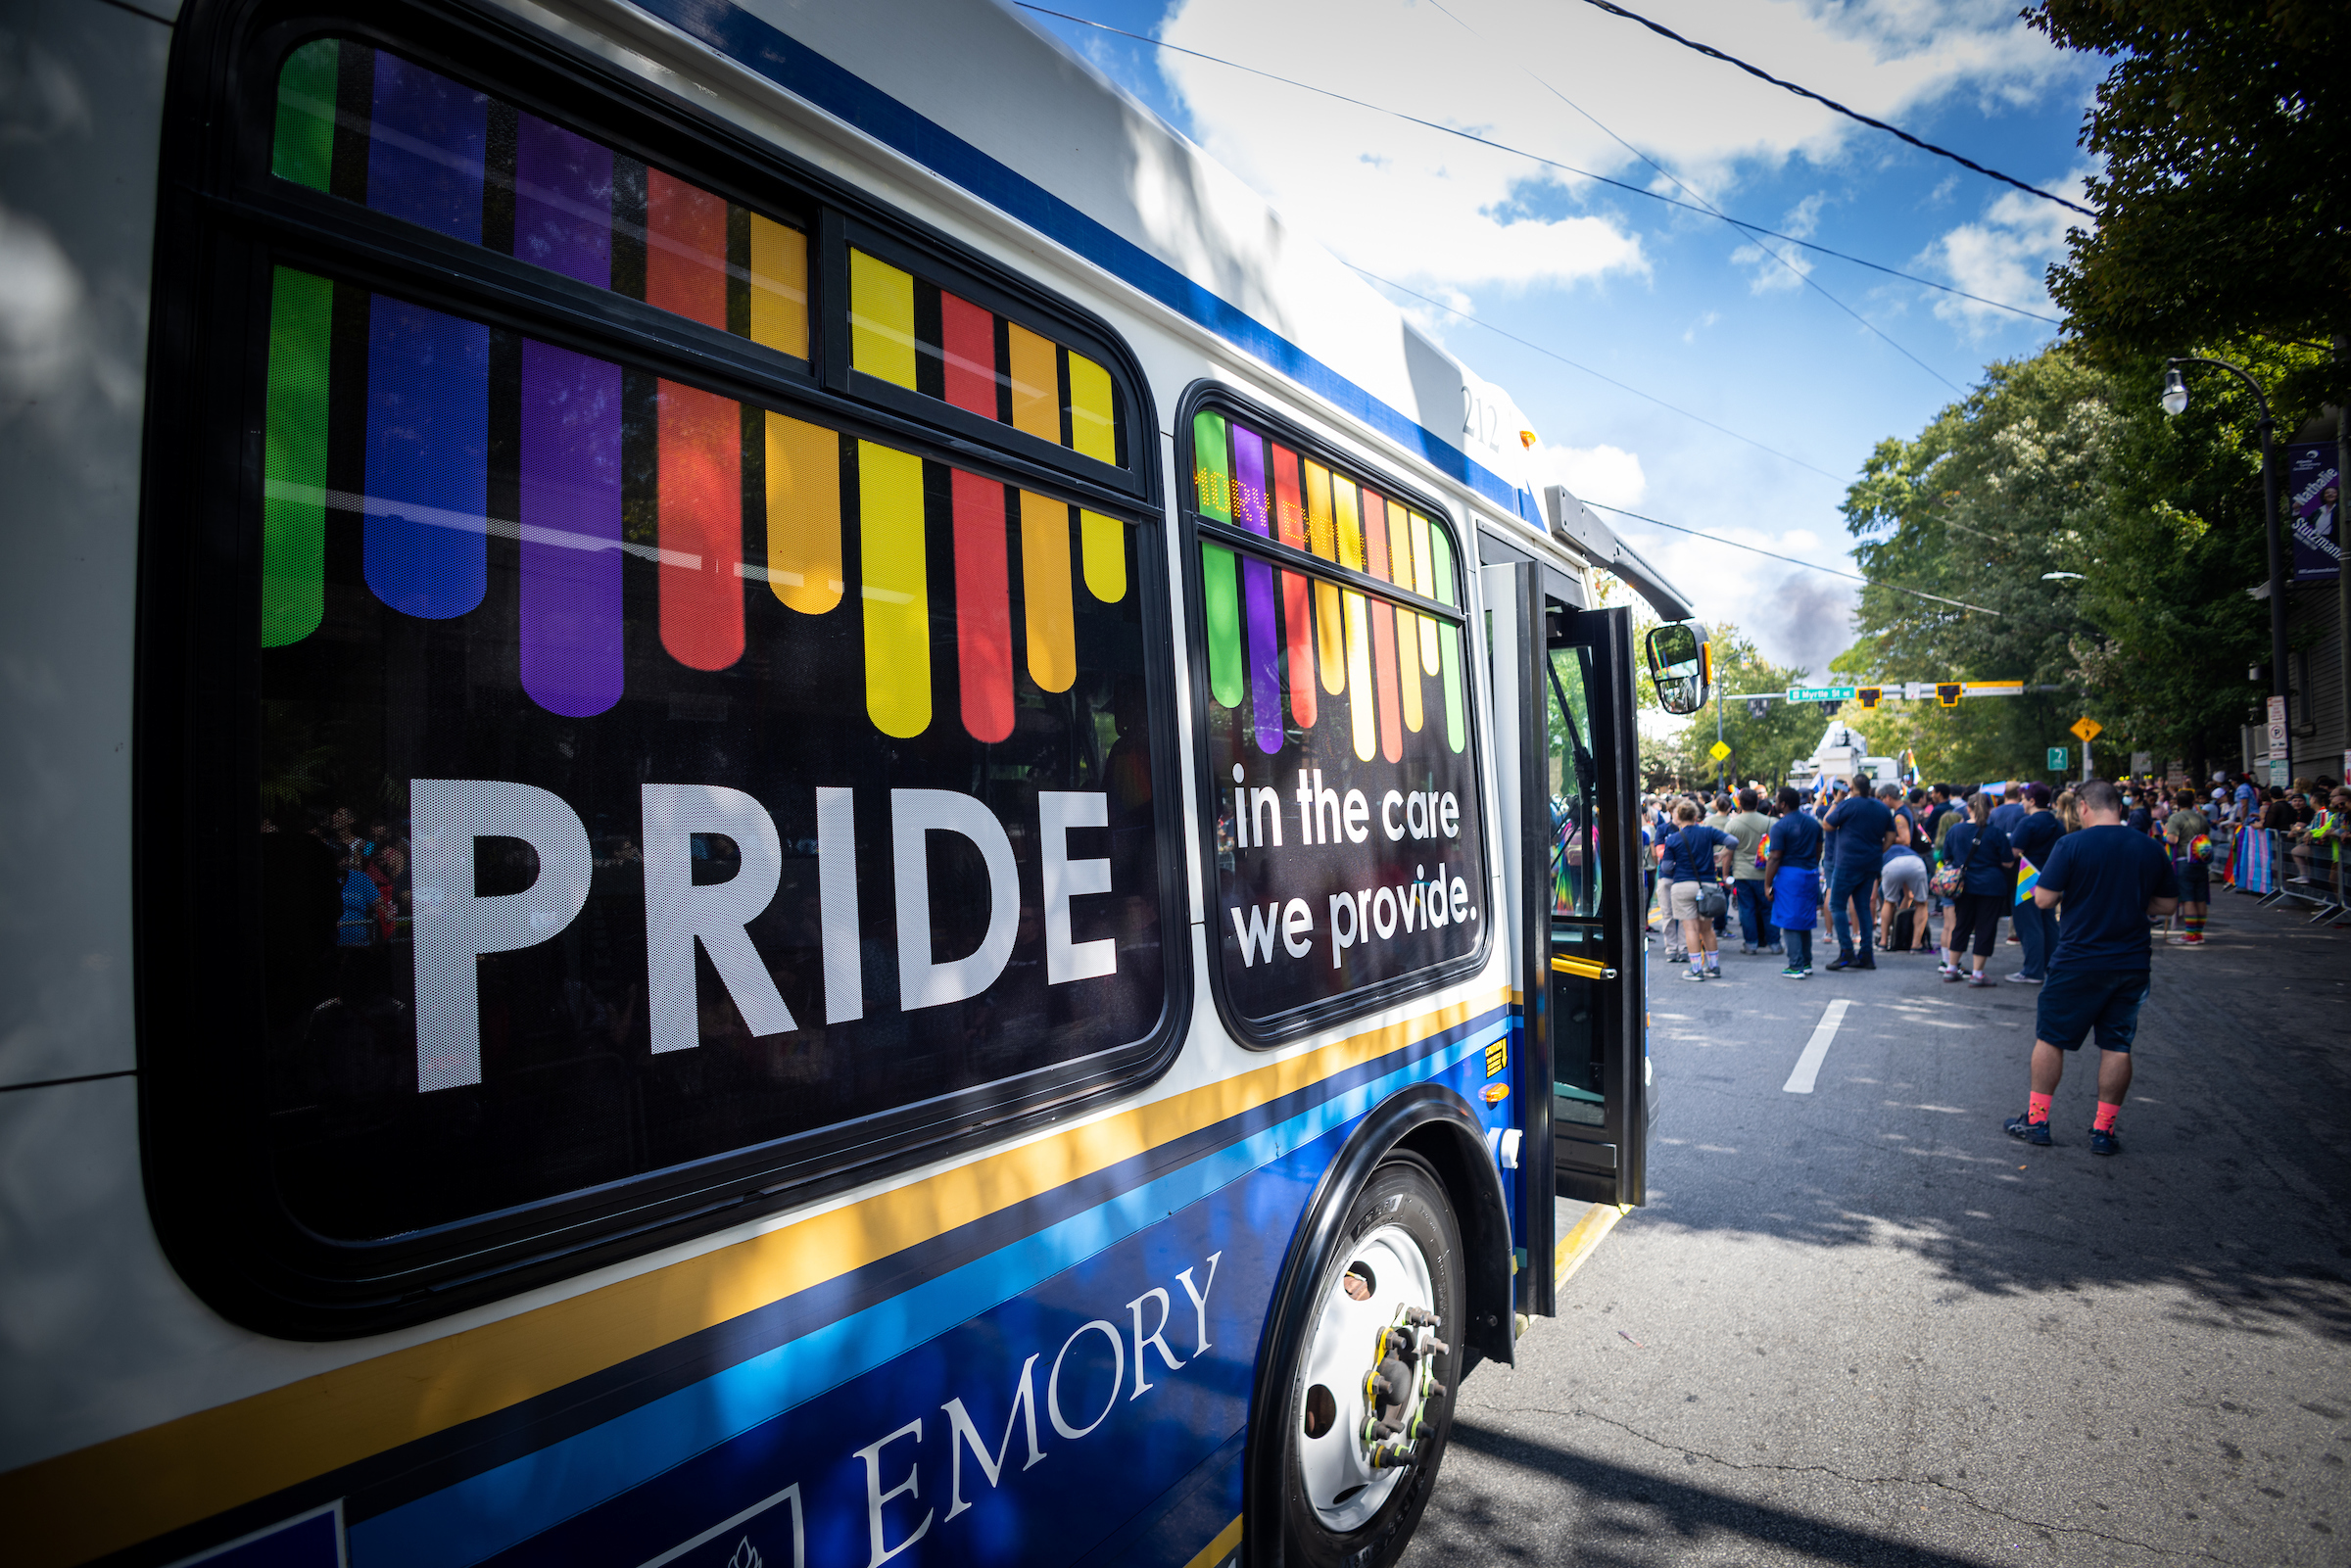 Emory Pride bus at ATL Pride parade in 2022